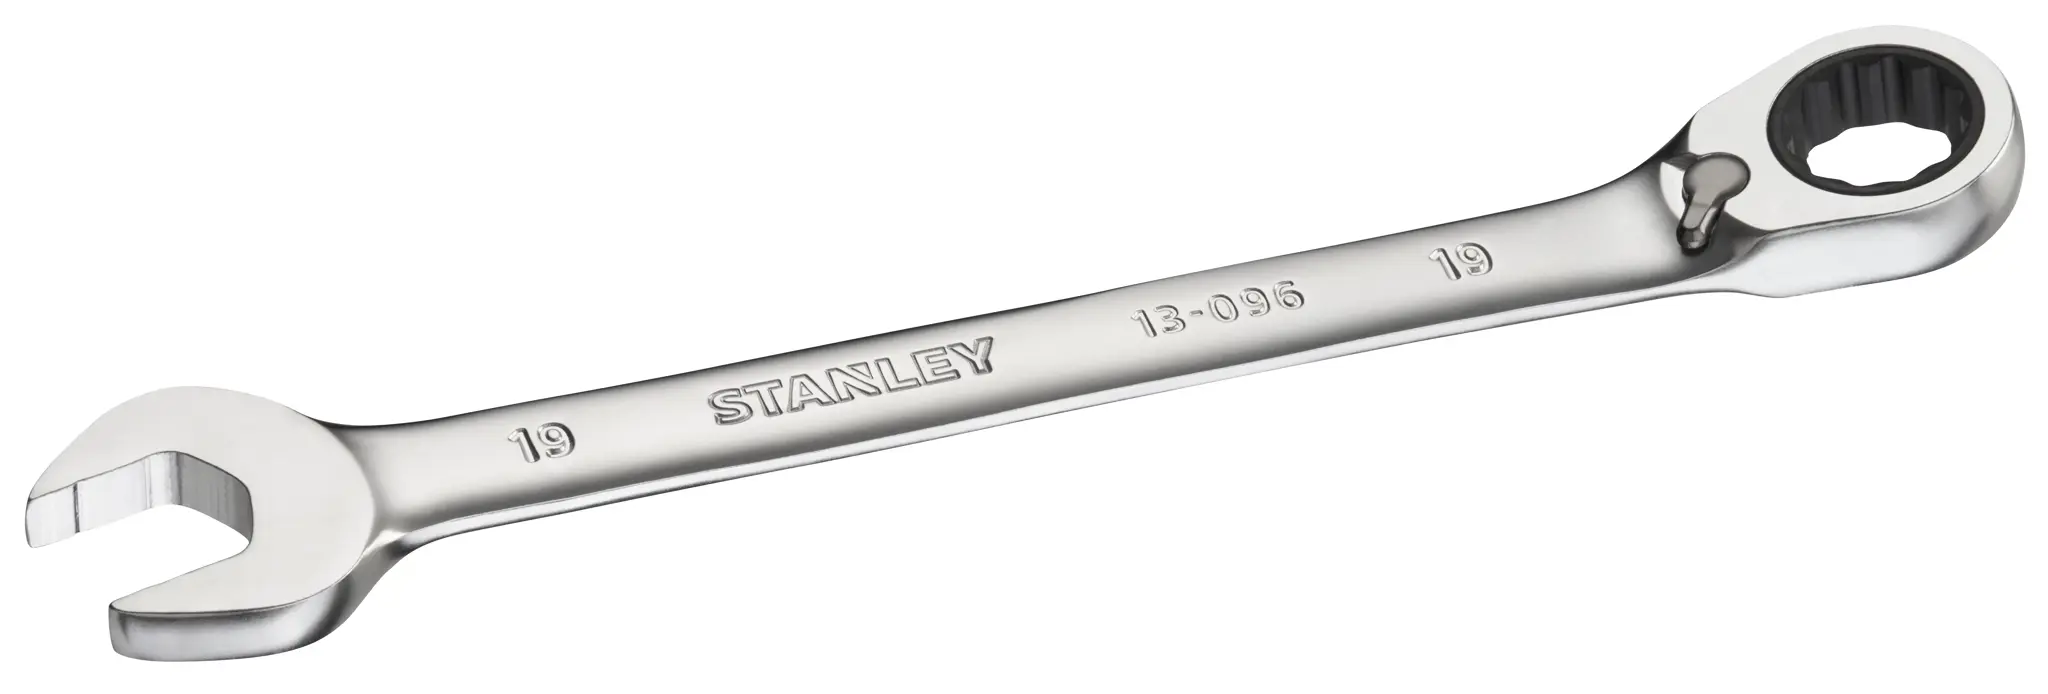 Ключ комбинированный с трещоткой Stanley Fatmax FMMT13096-0 19 мм нож stanley fatmax xl 0 10 820 с 25 мм лезвием